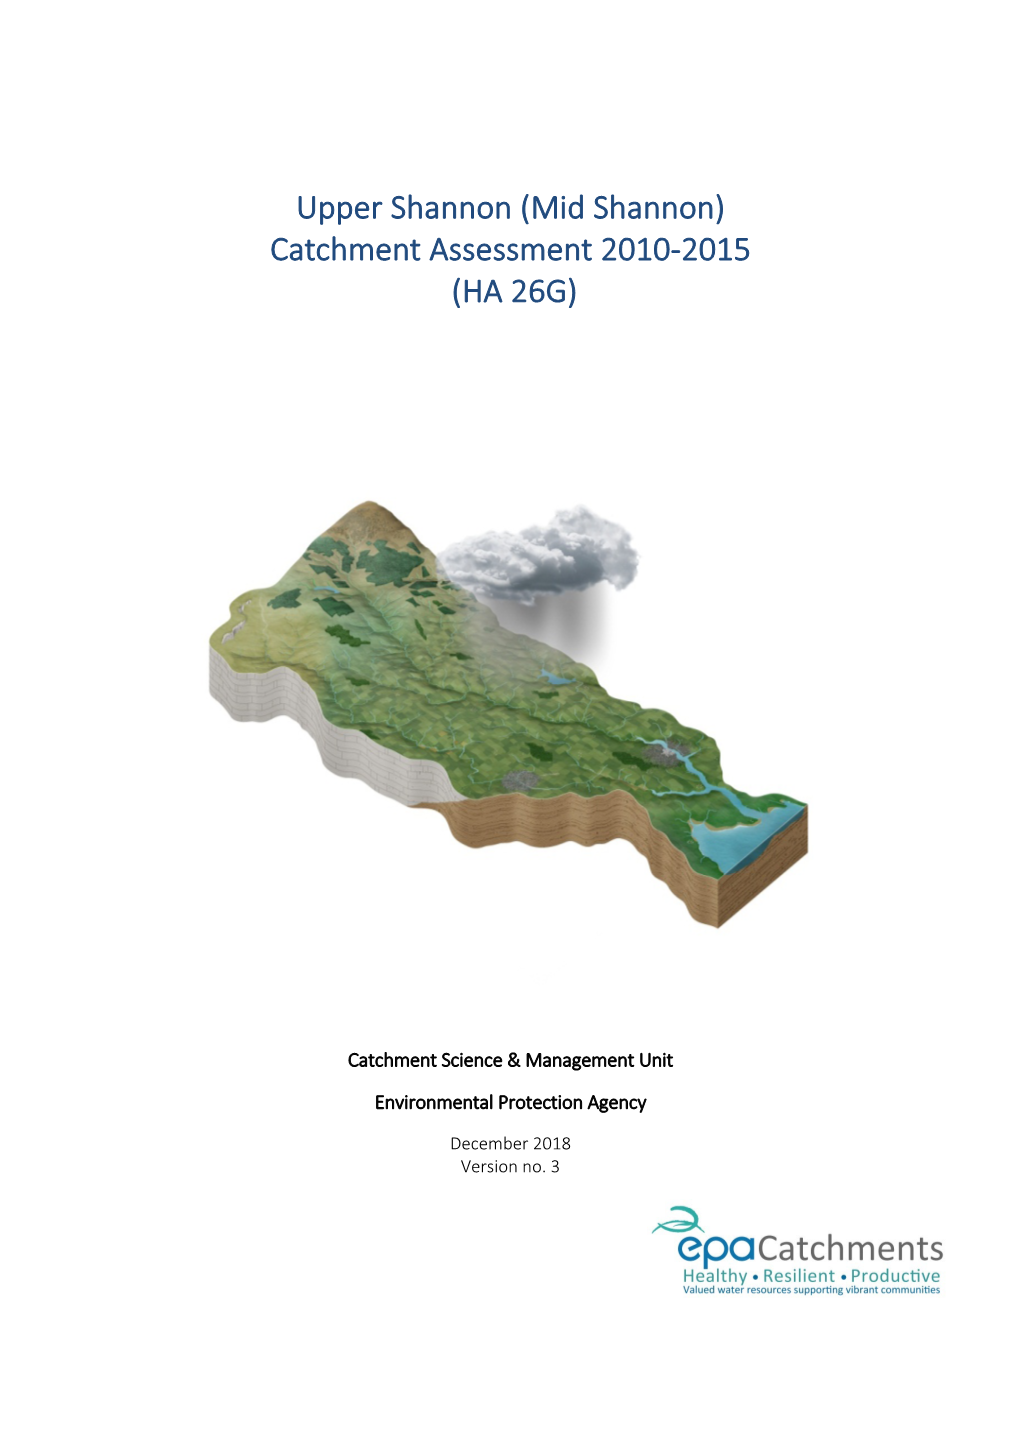 Upper Shannon (Mid Shannon) Catchment Assessment 2010-2015 (HA 26G)